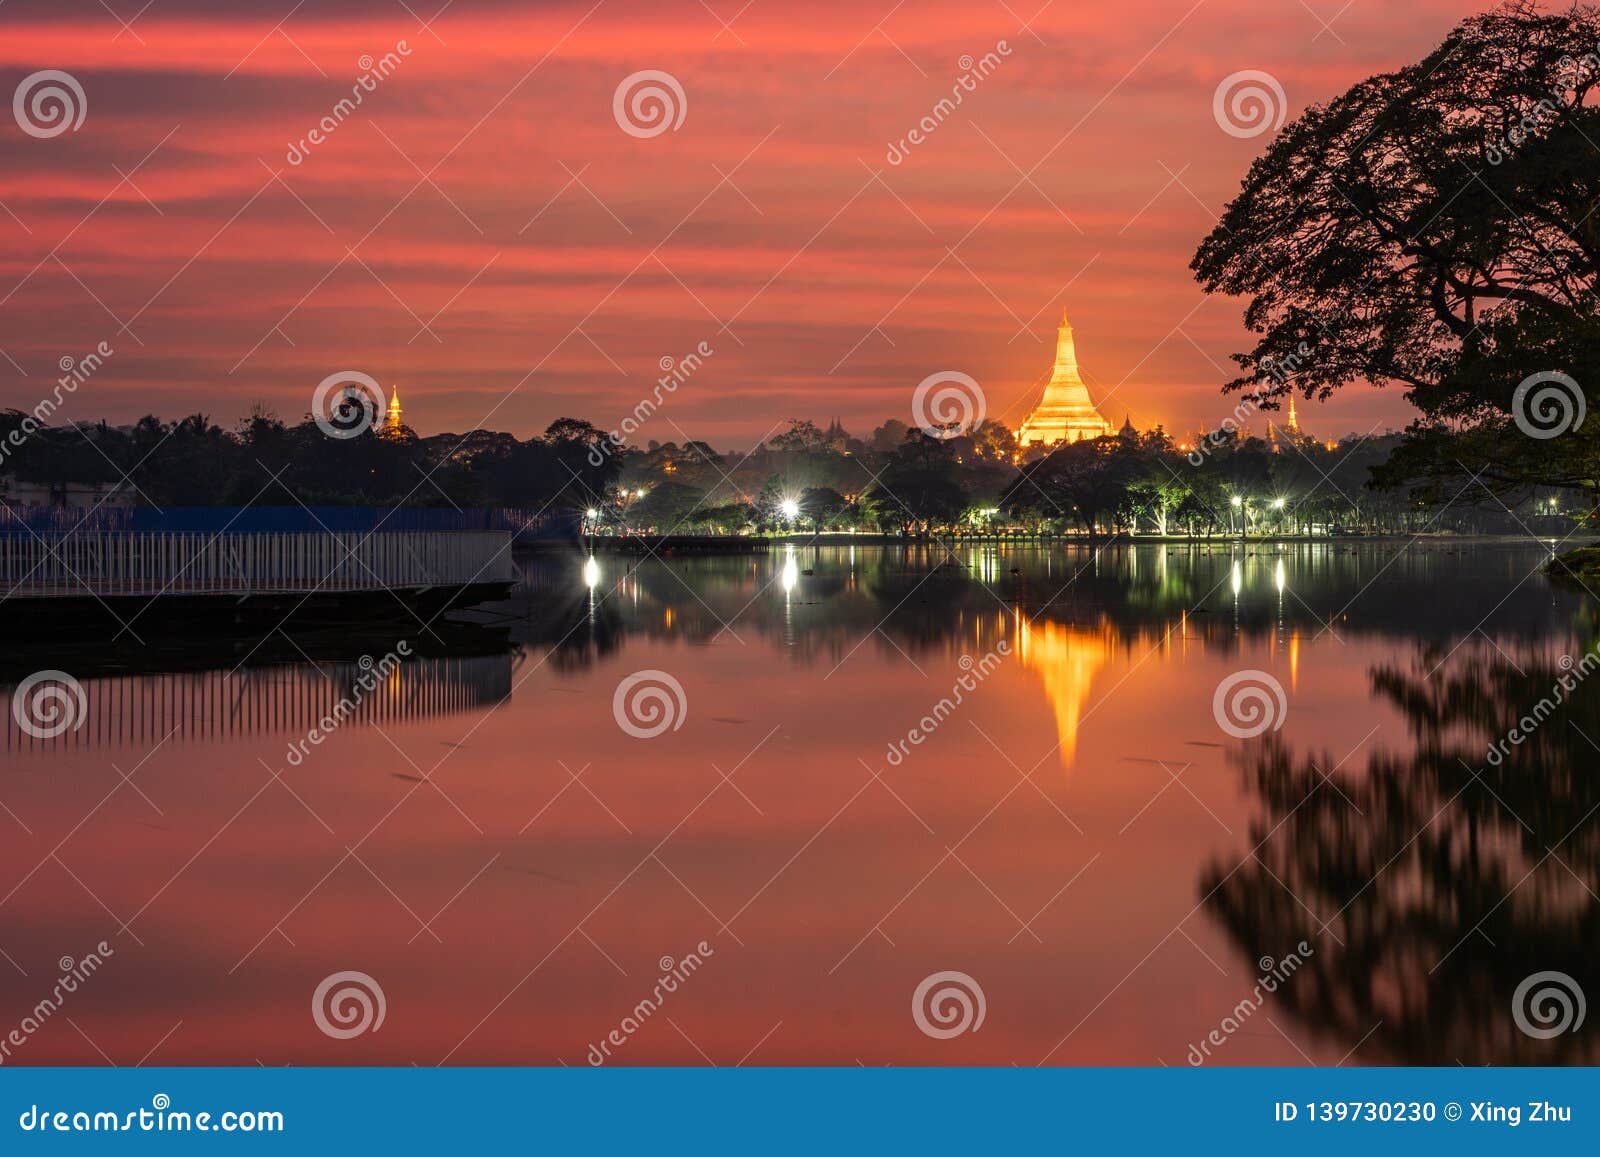 sunset in the front of the lake, view of shwedagon pagoda, yangon, myanmar. burma asia. buddha pagoda